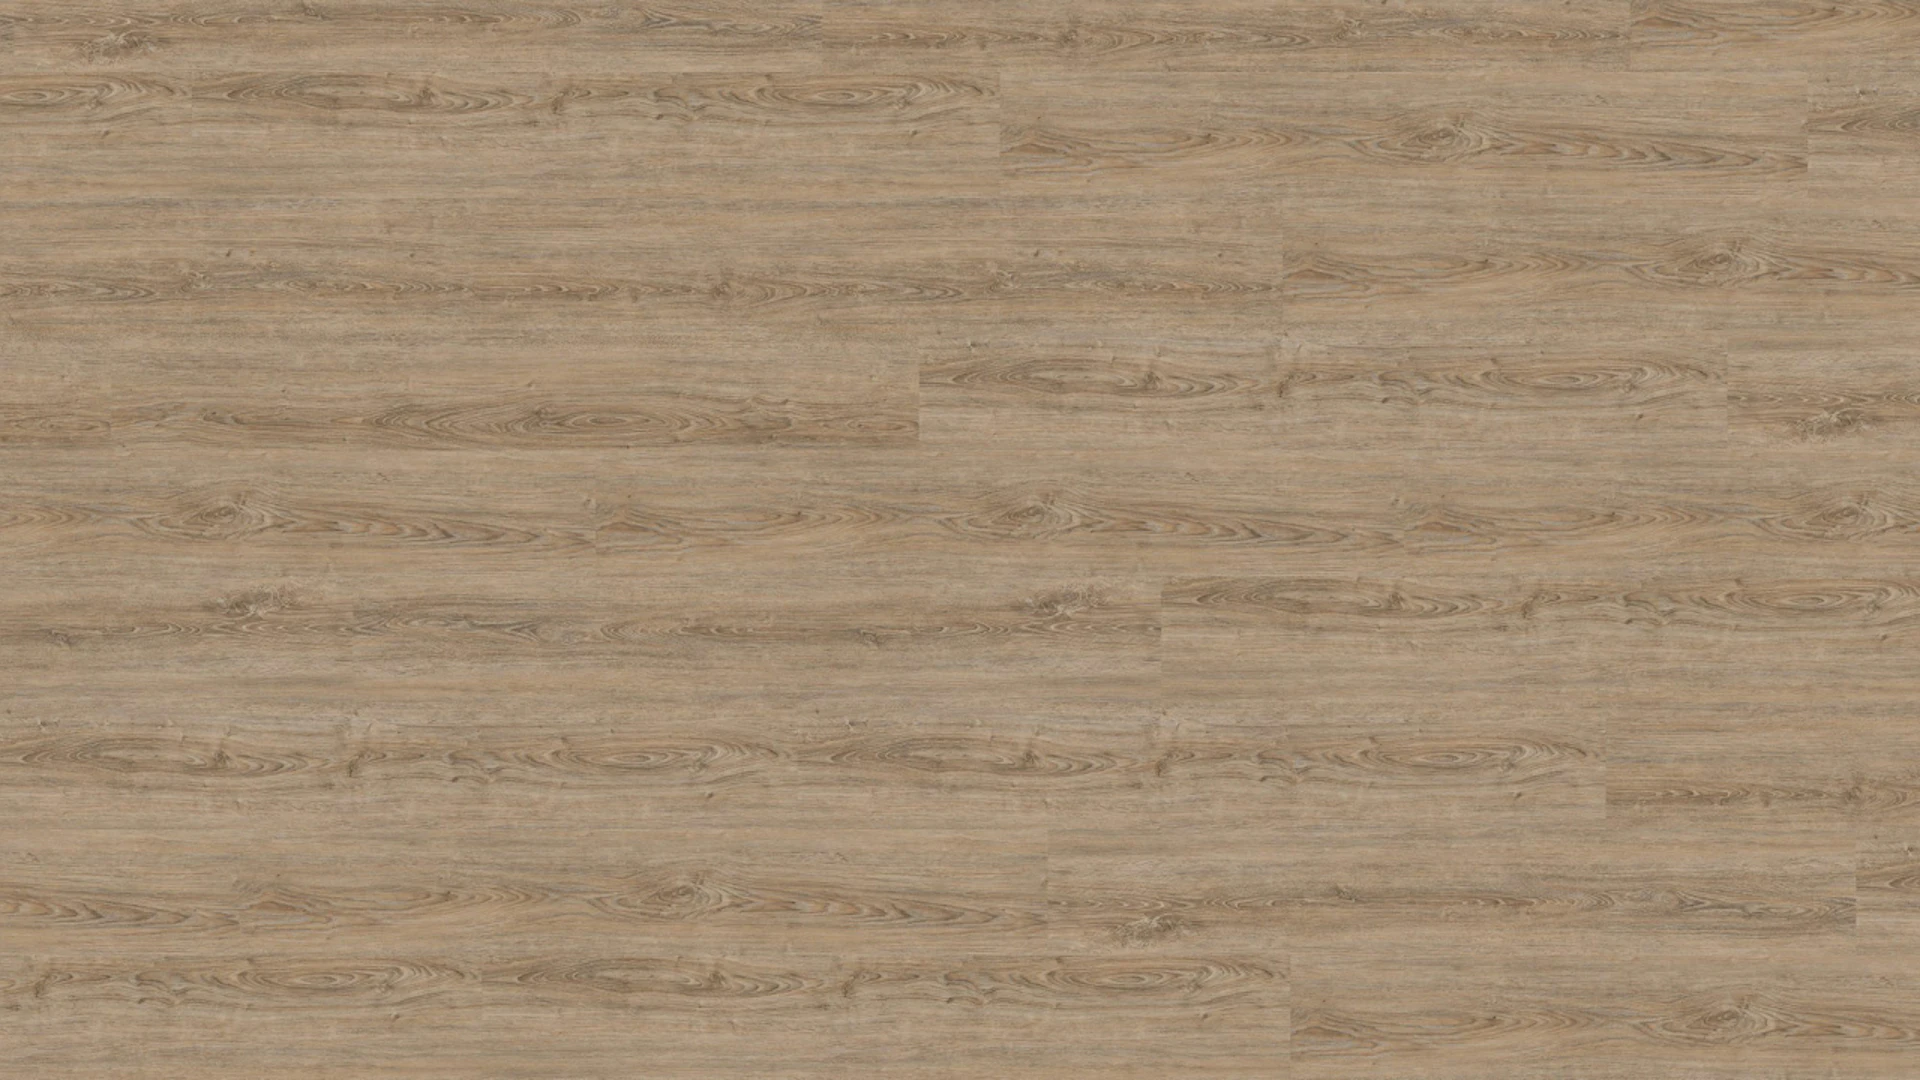 Wineo Sol PVC clipsable - 800 wood XL Clay Calm Oak (DLC00062)